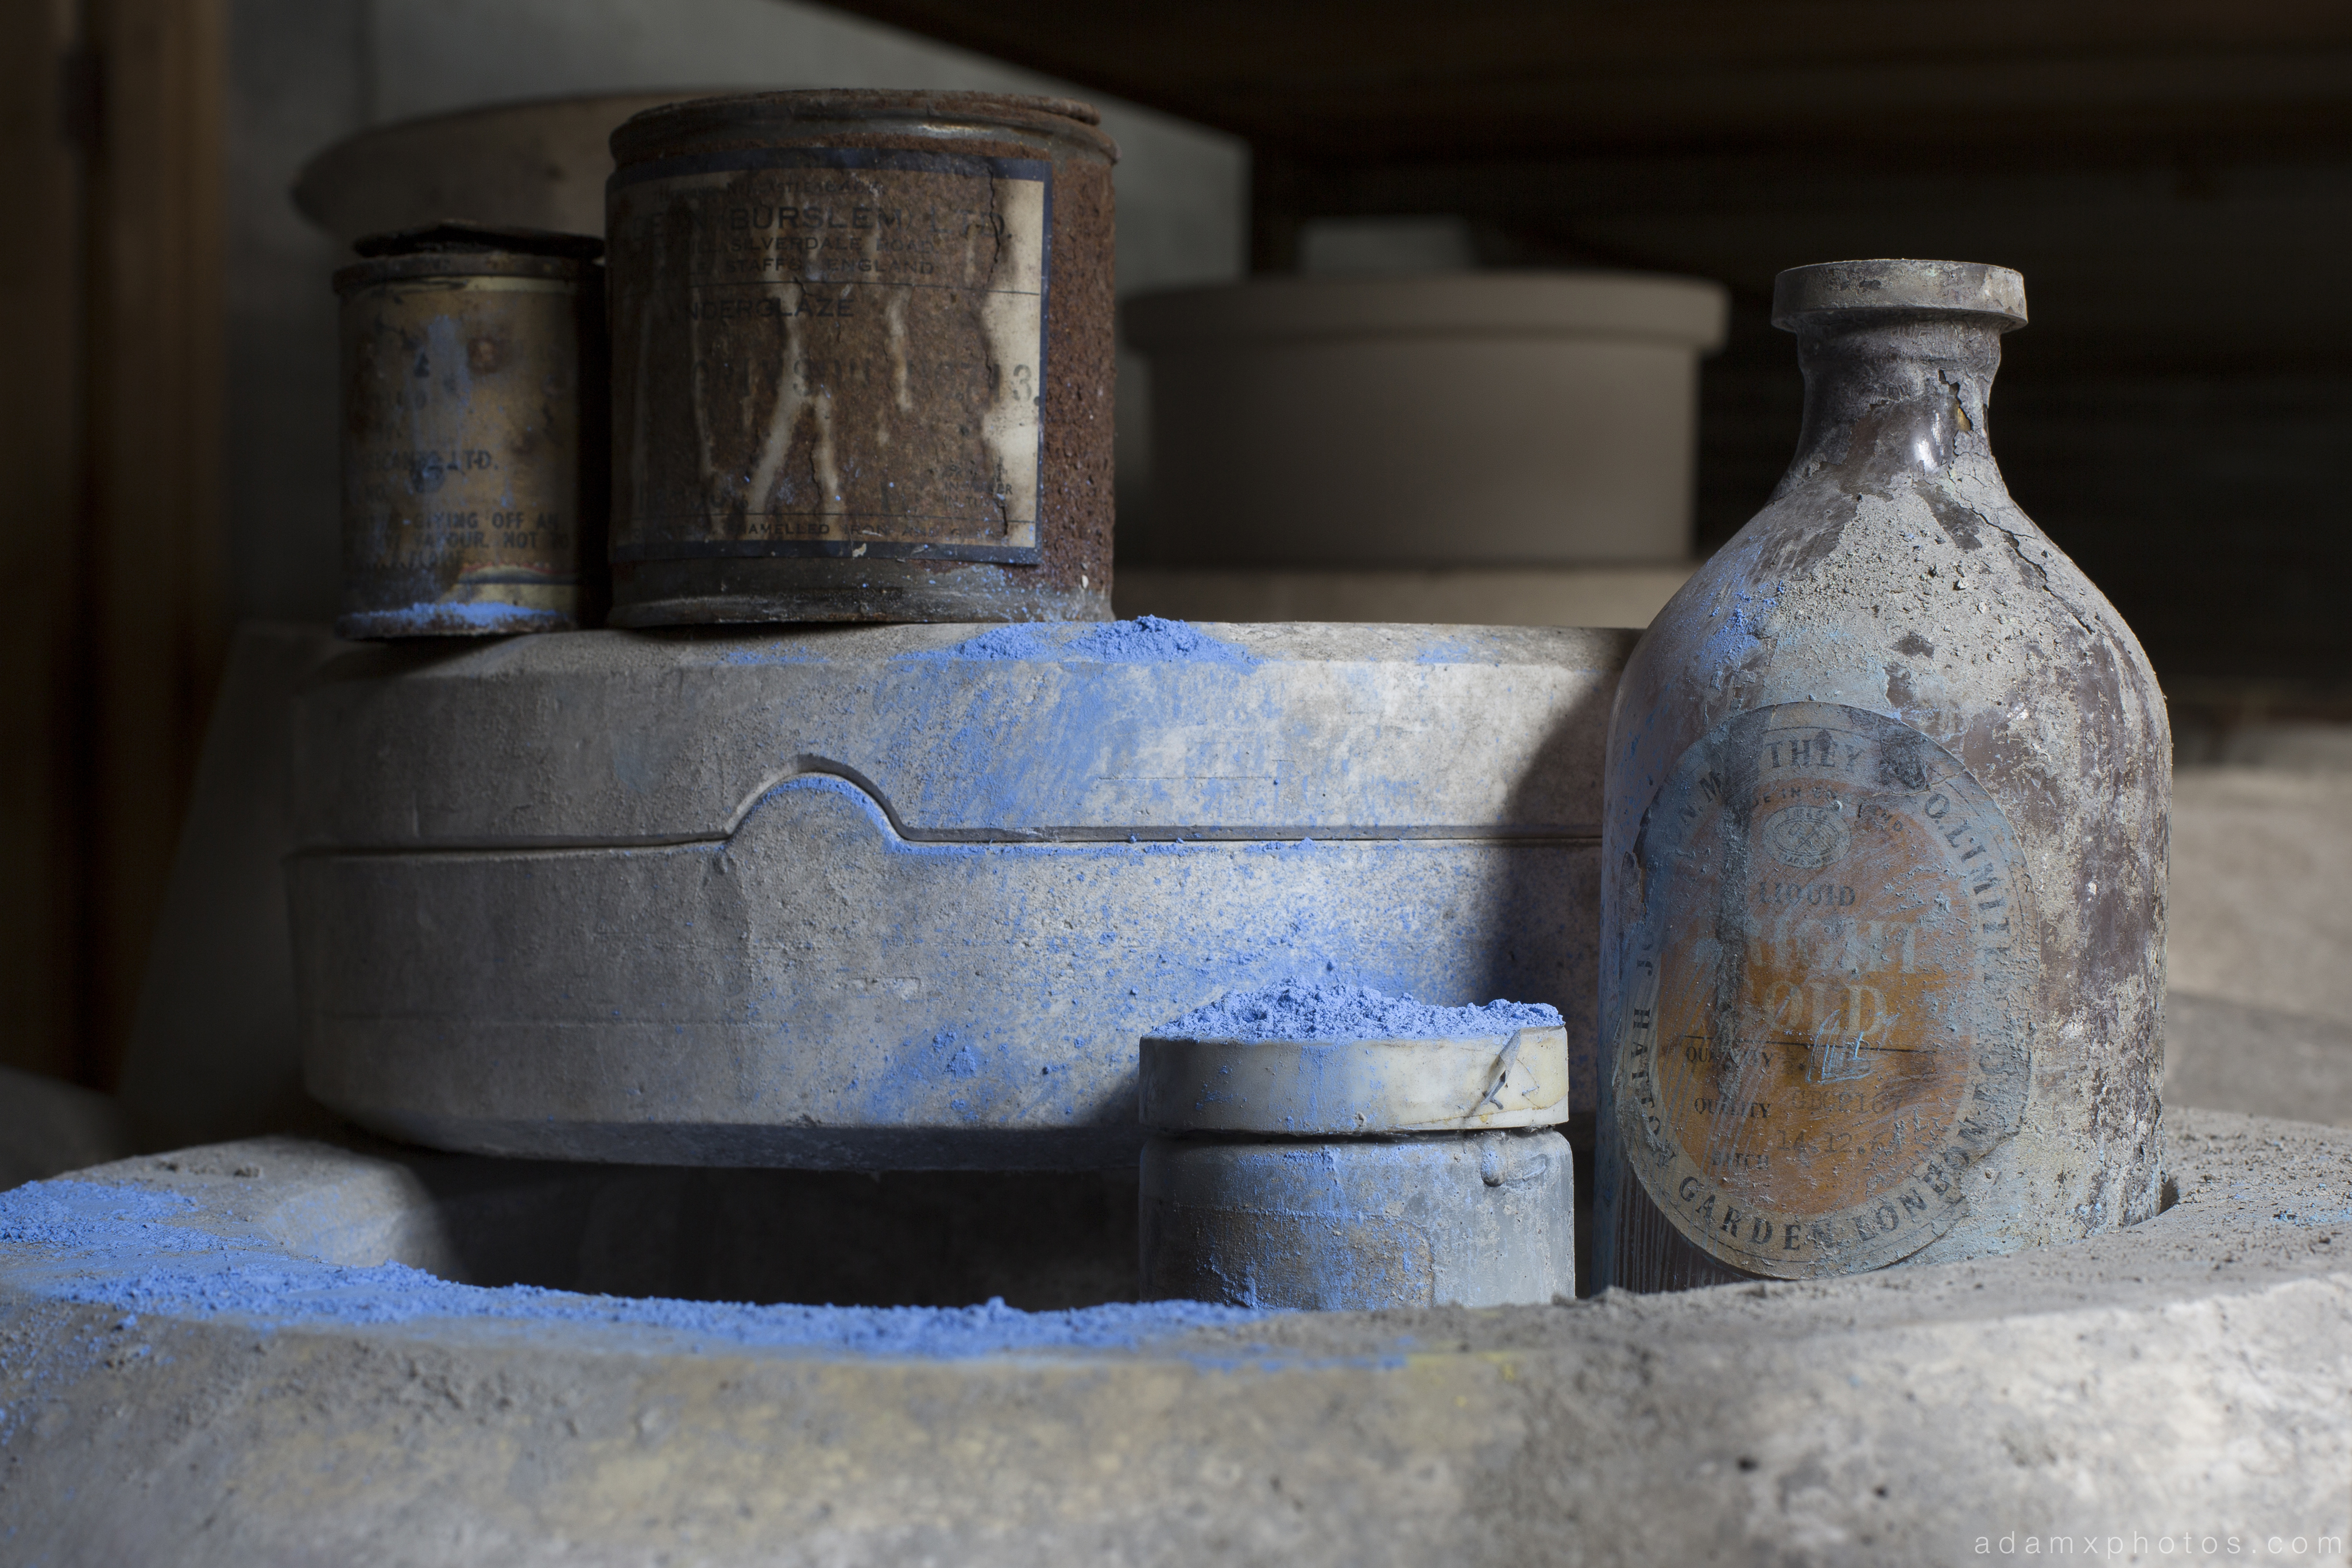 TG Green Green's pottery derbyshire Urbex Adam X Urban Exploration 2015 Abandoned decay lost forgotten derelict